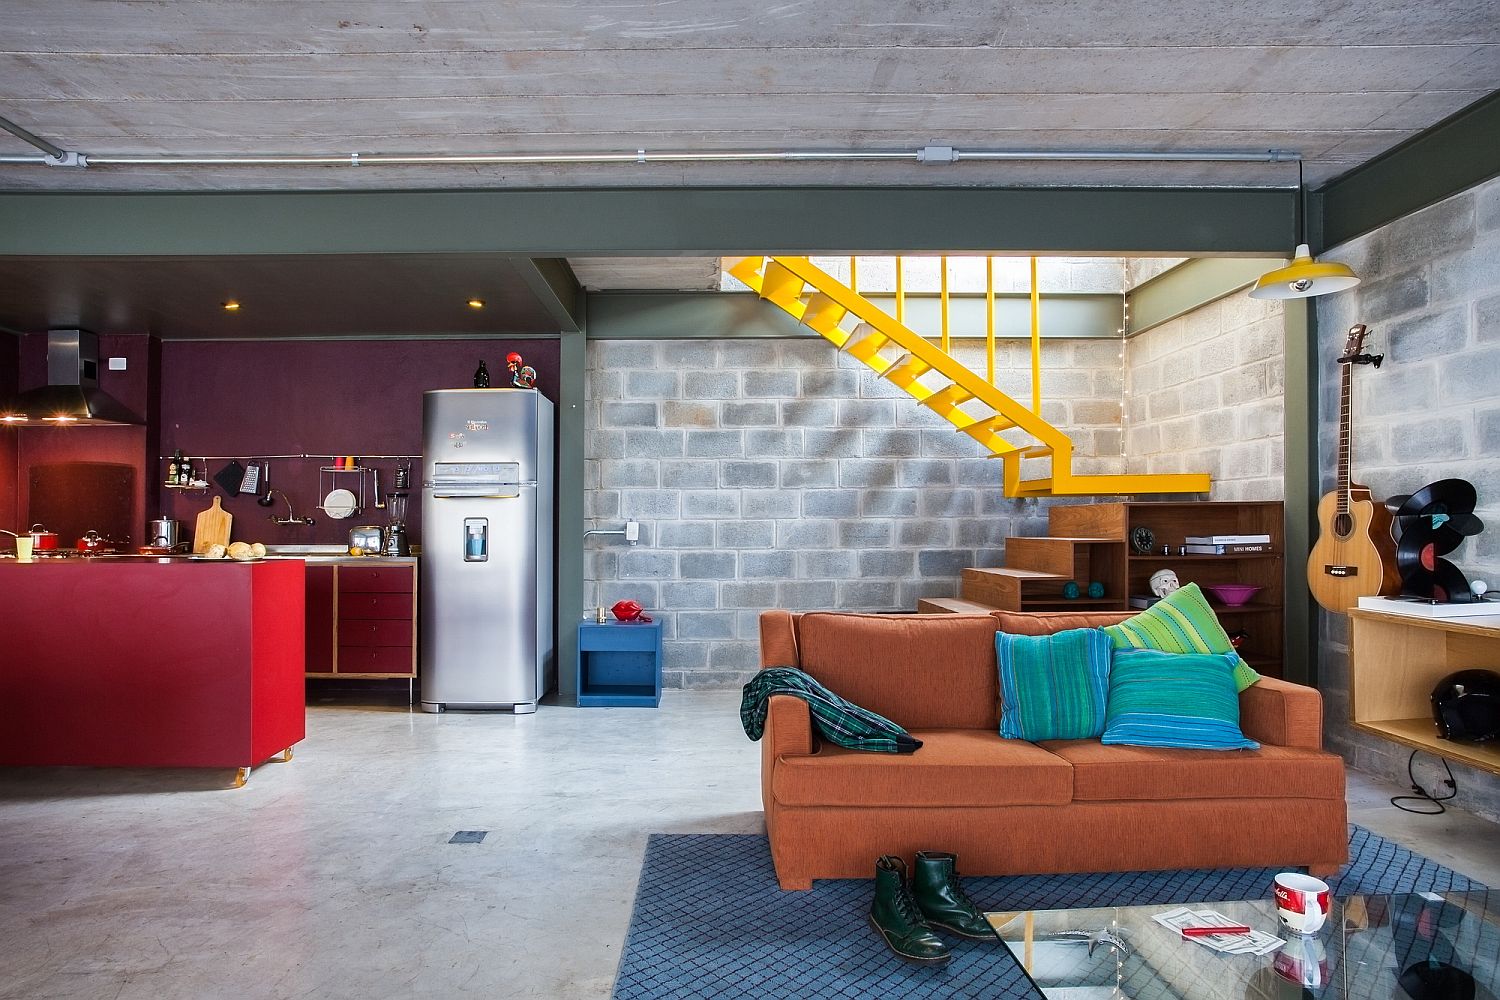 Decor-kitchen-island-and-staircase-add-bright-color-to-the-interior